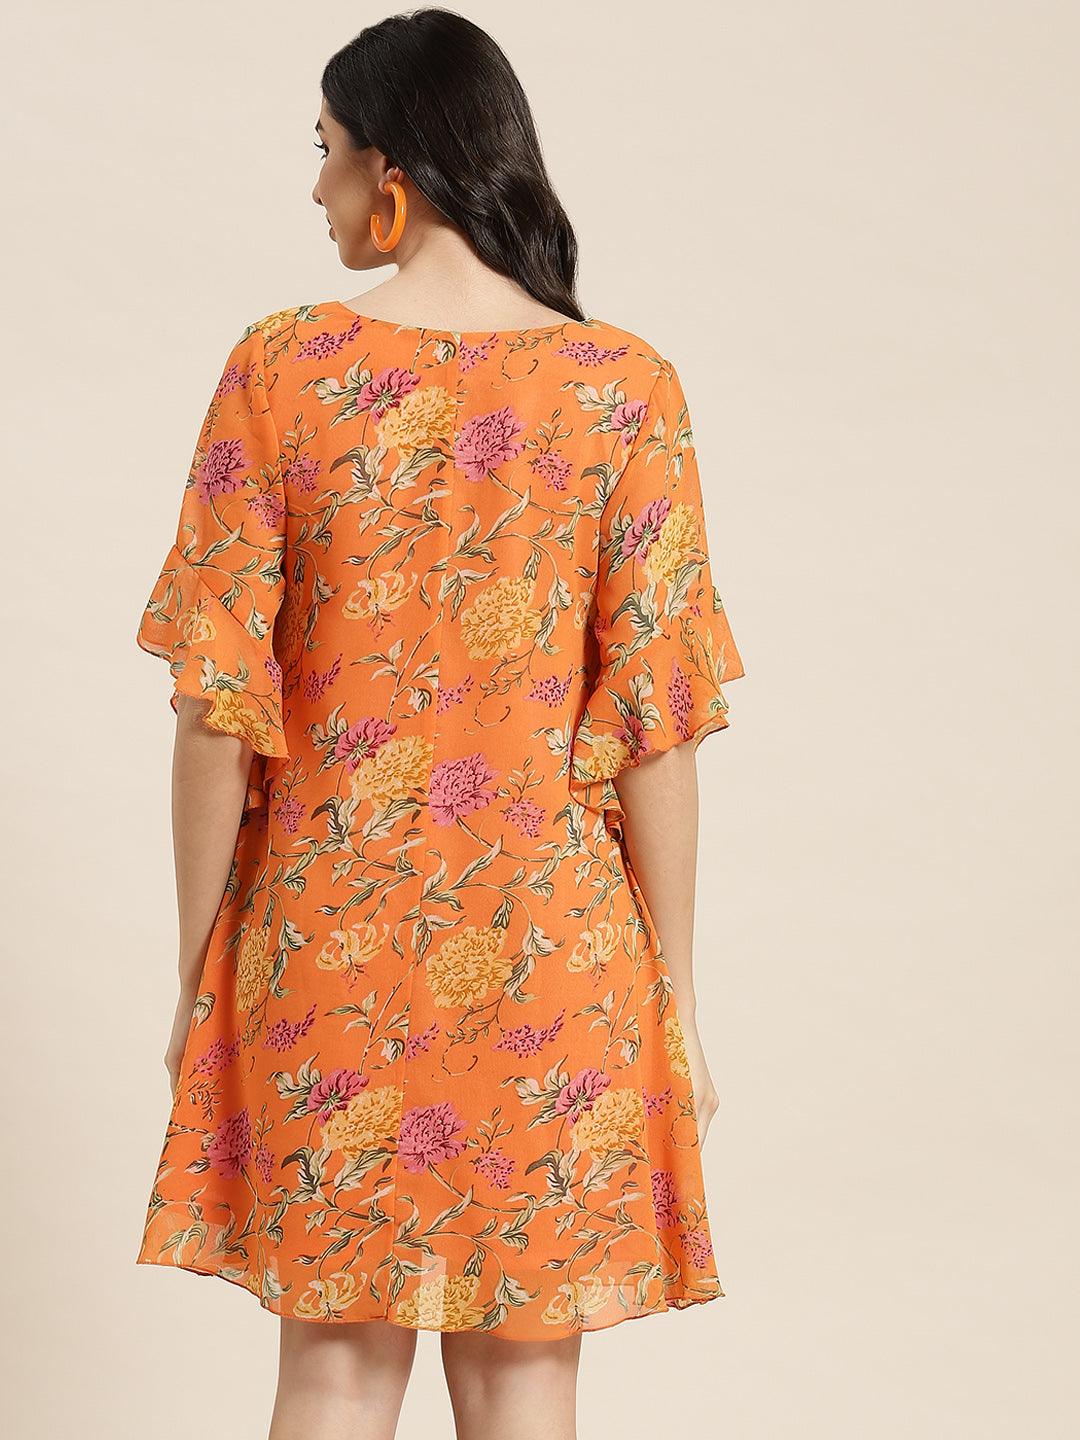 Qurvii Floral Orange A-line Dress - Qurvii India